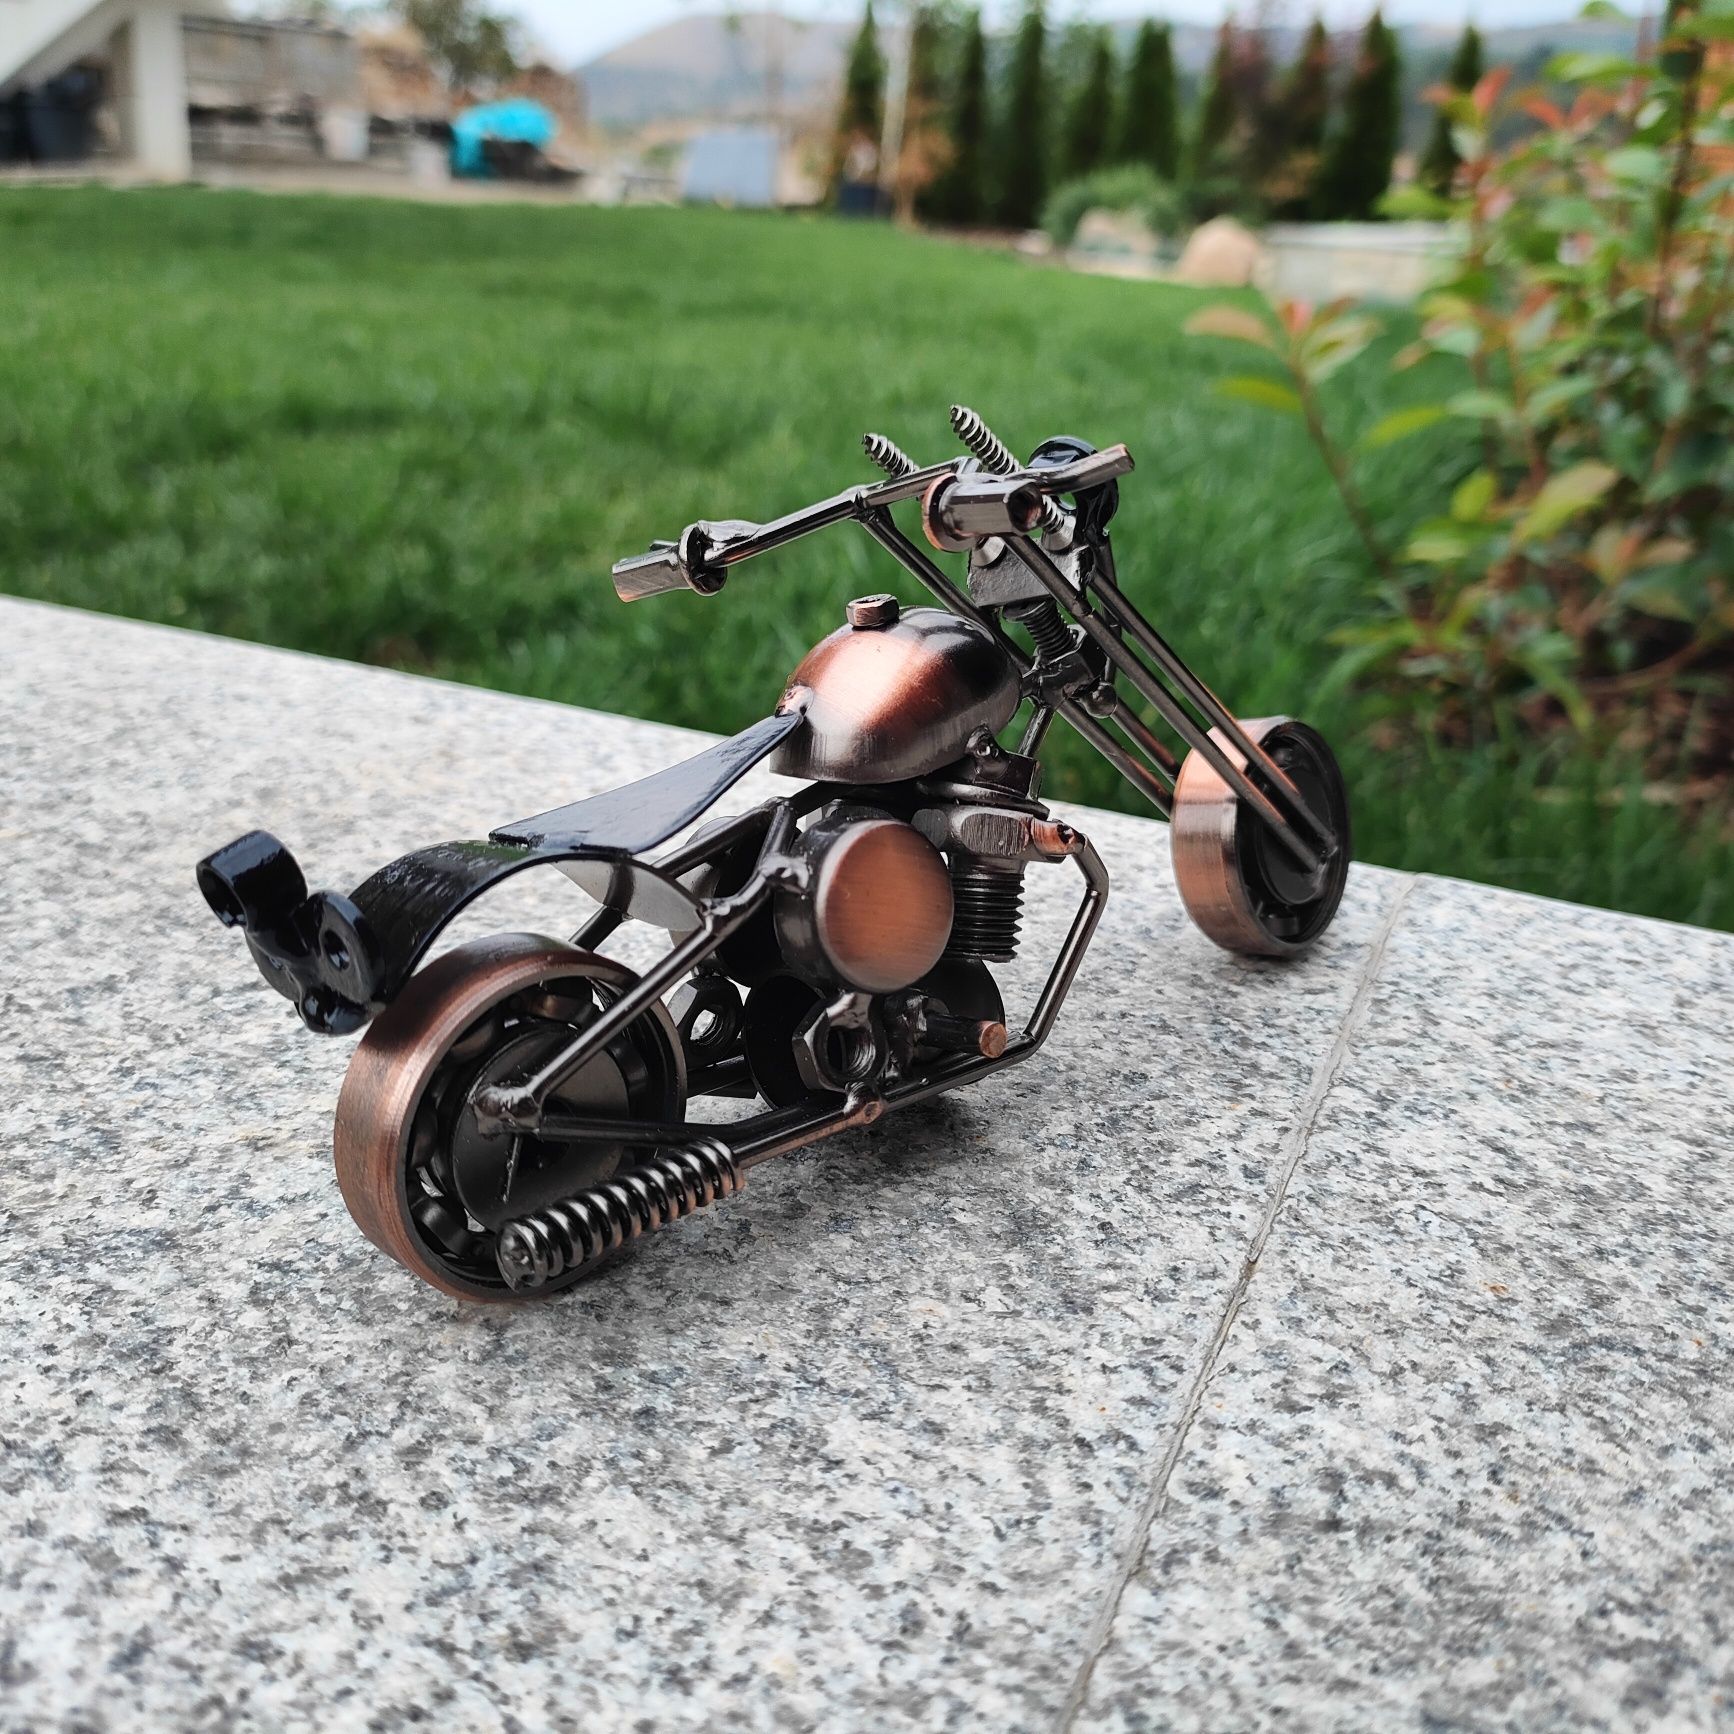 Ръчно изработен мотоциклет от стари метални части